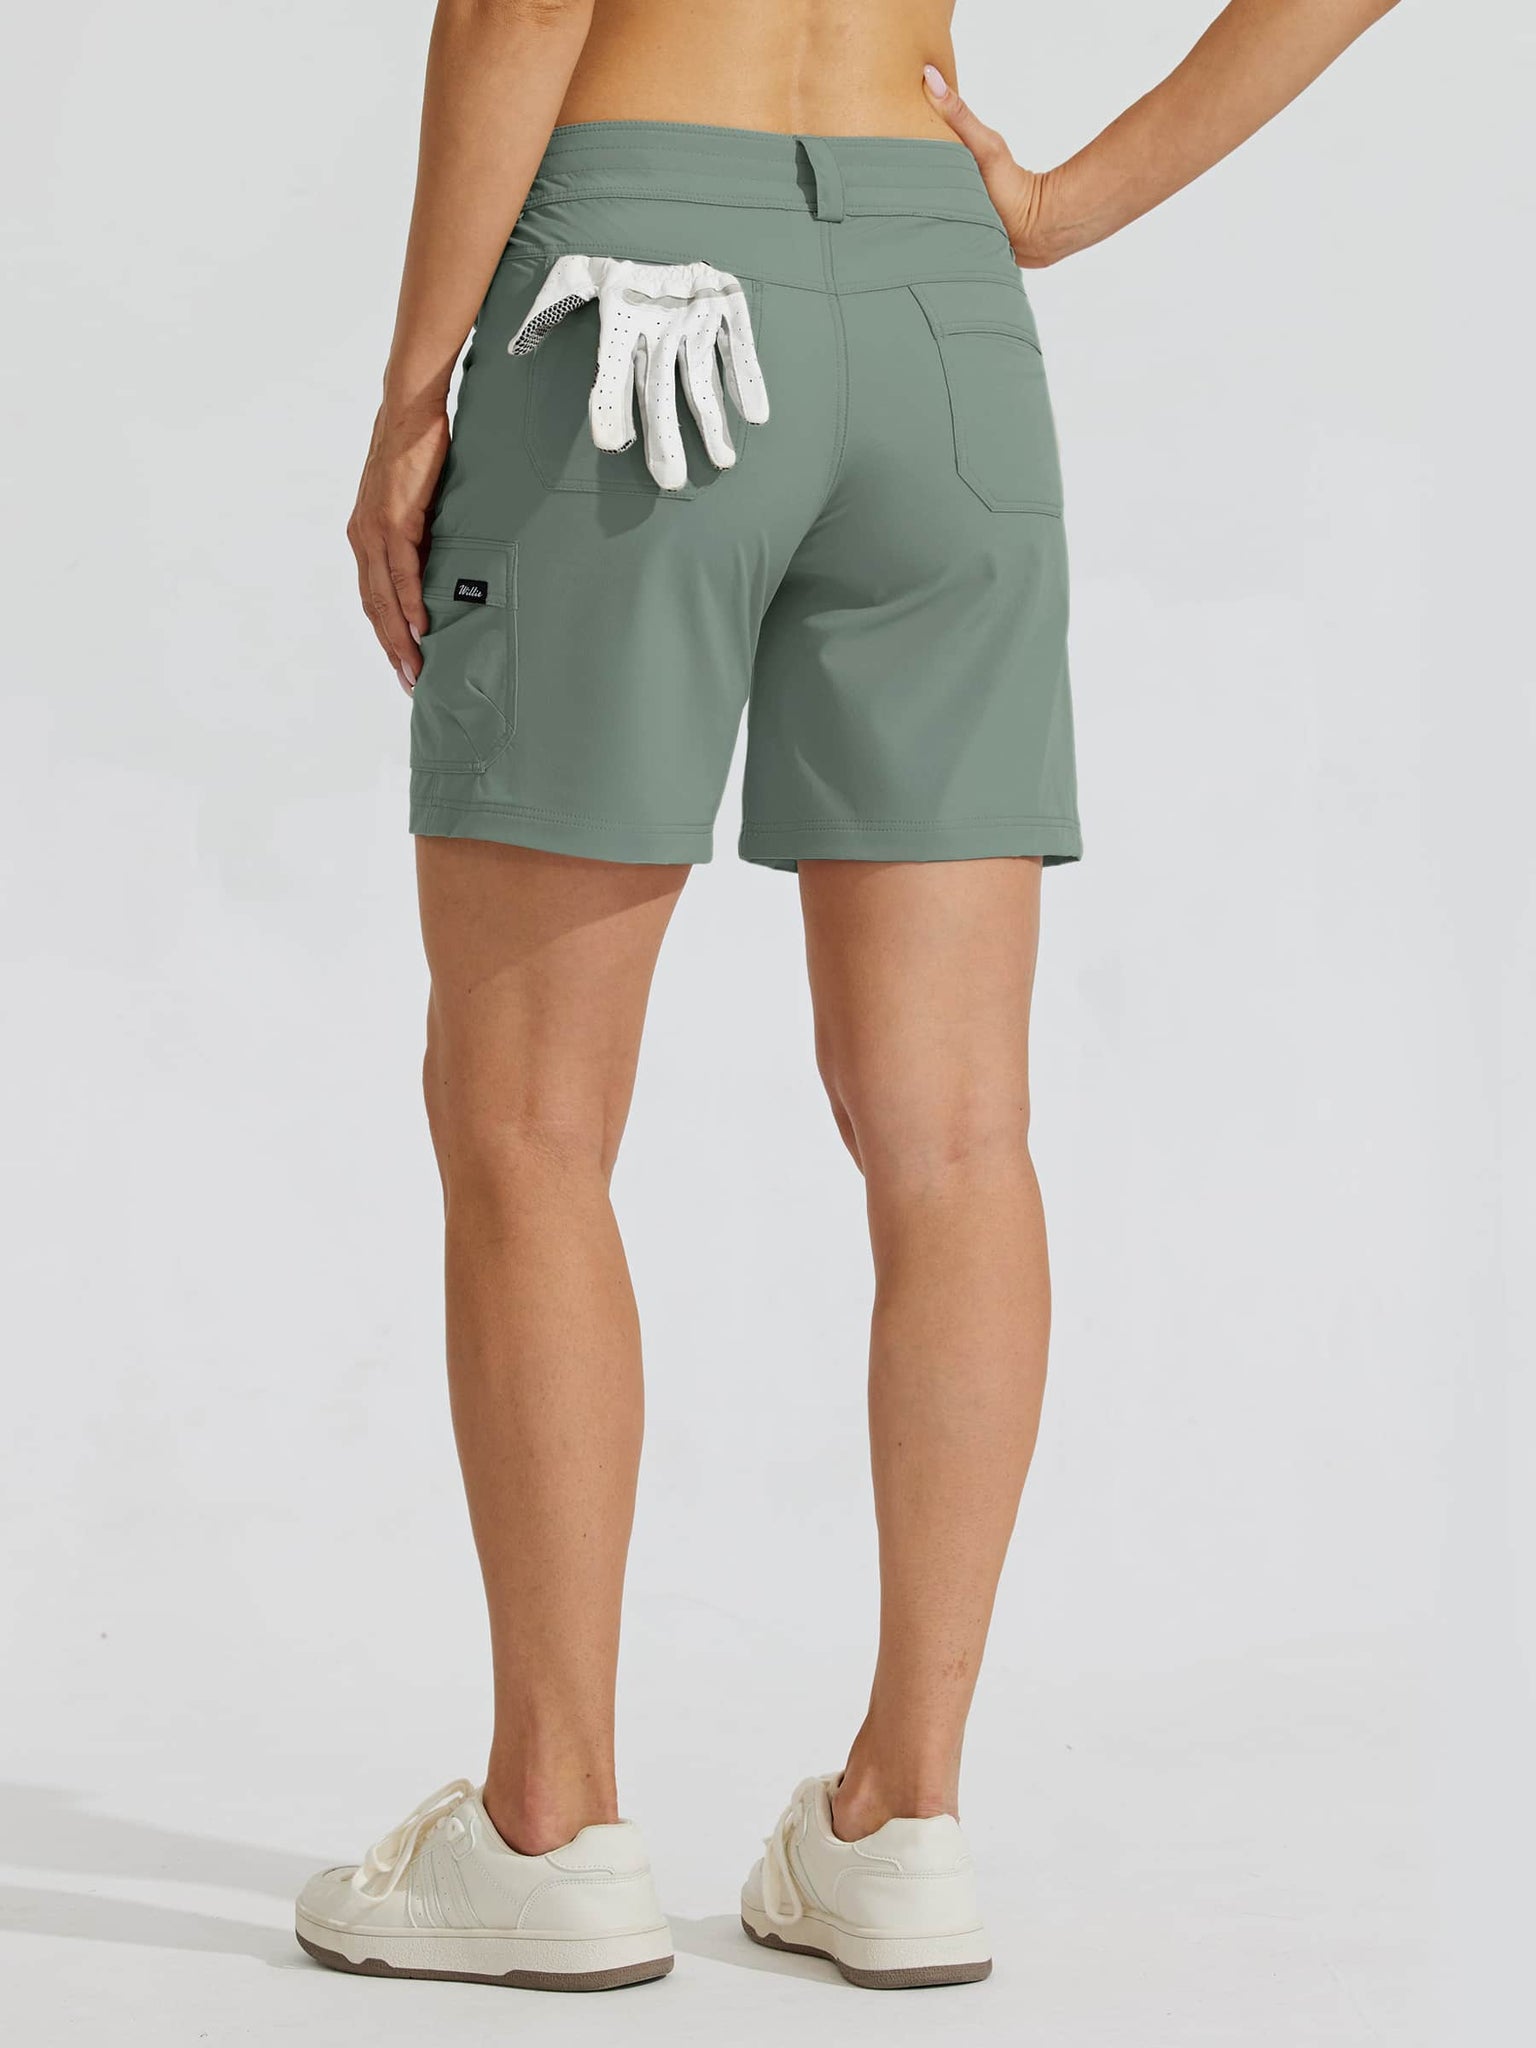 Women's Outdoor Pro Shorts Green_model1